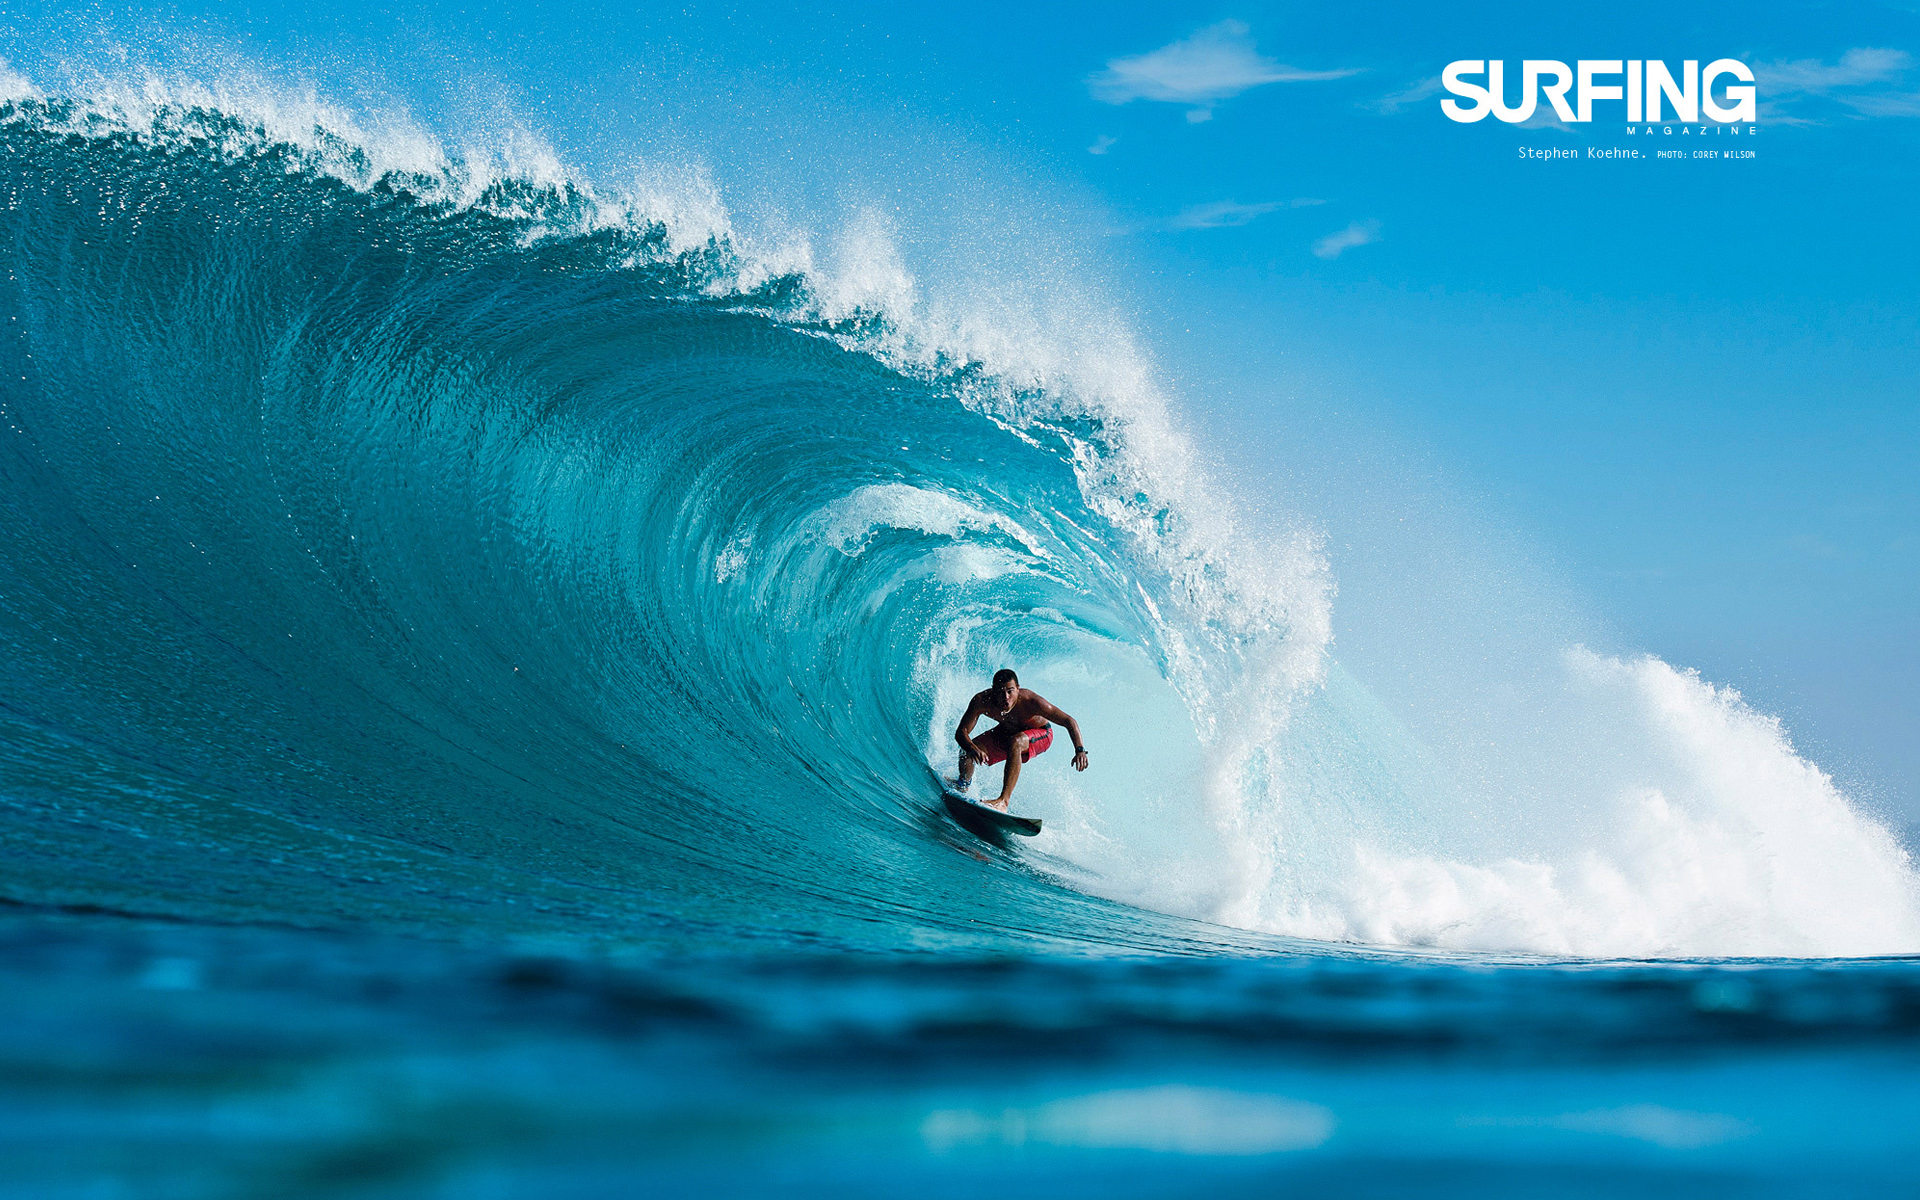 Hd surfing wallpaper downloads free